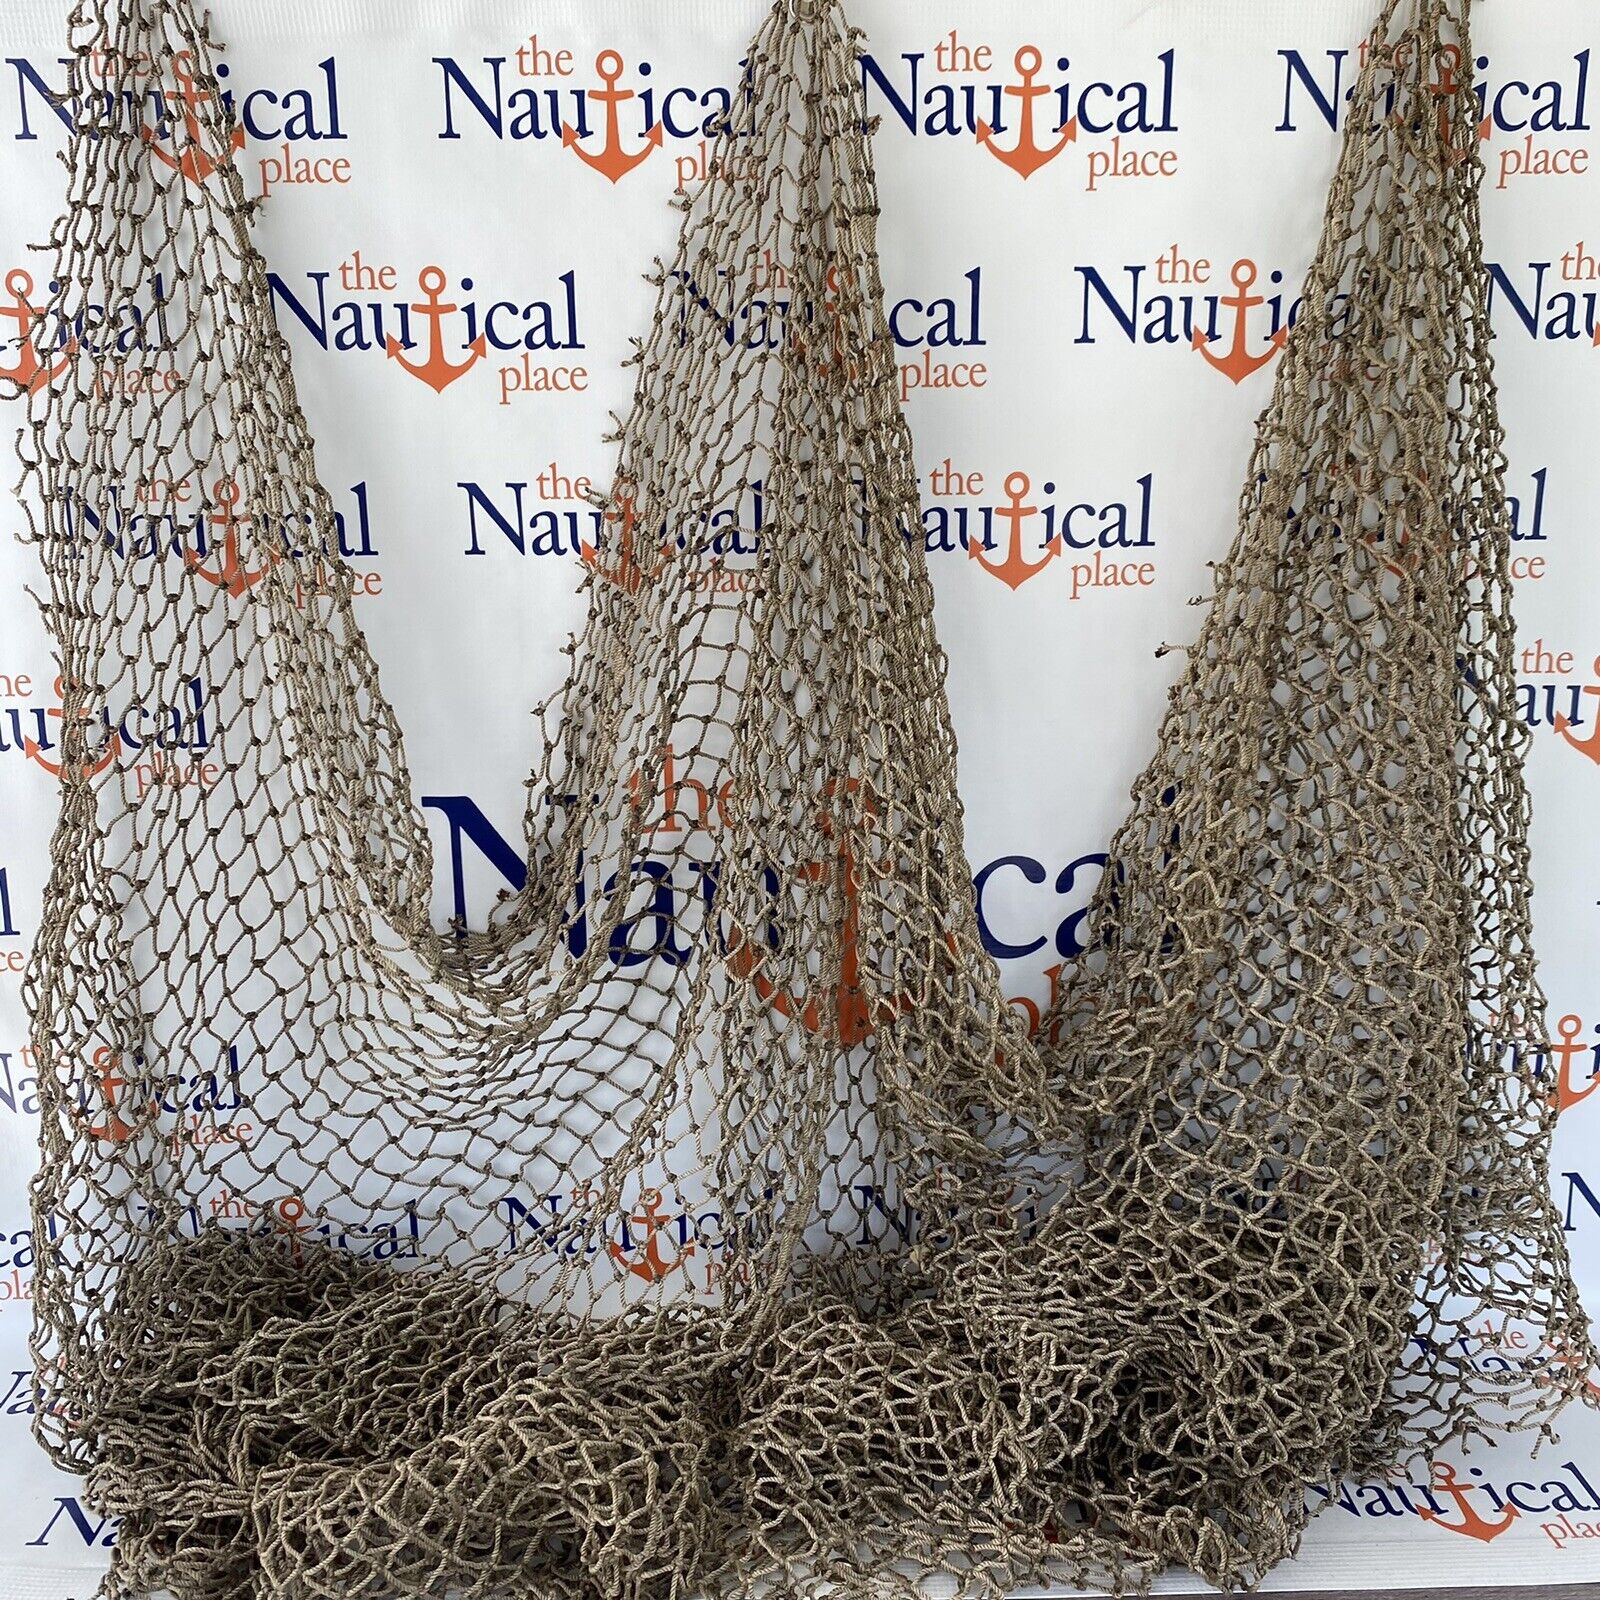 Authentic Used Fishing Net 5\'x10\' - Fish Netting - Old Vintage Nautical Decor